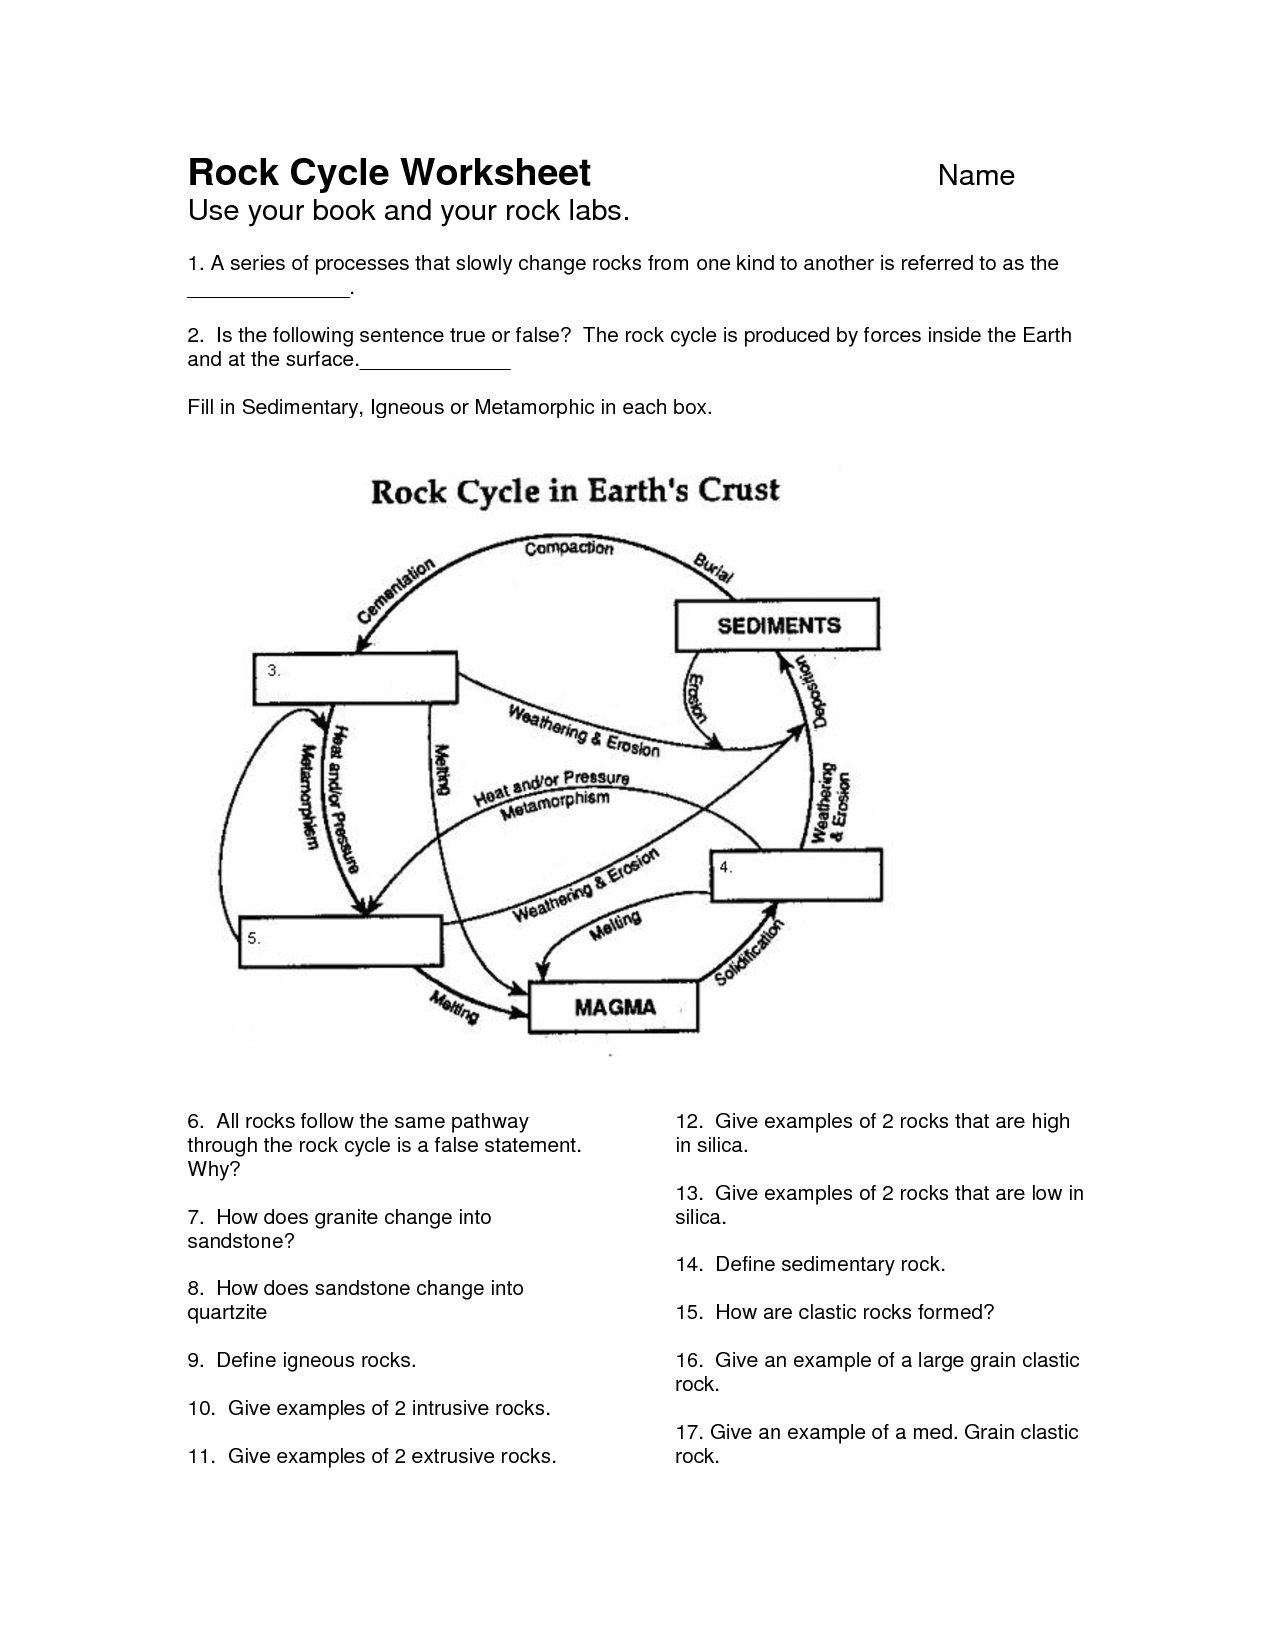 Rock Cycle Worksheets Image